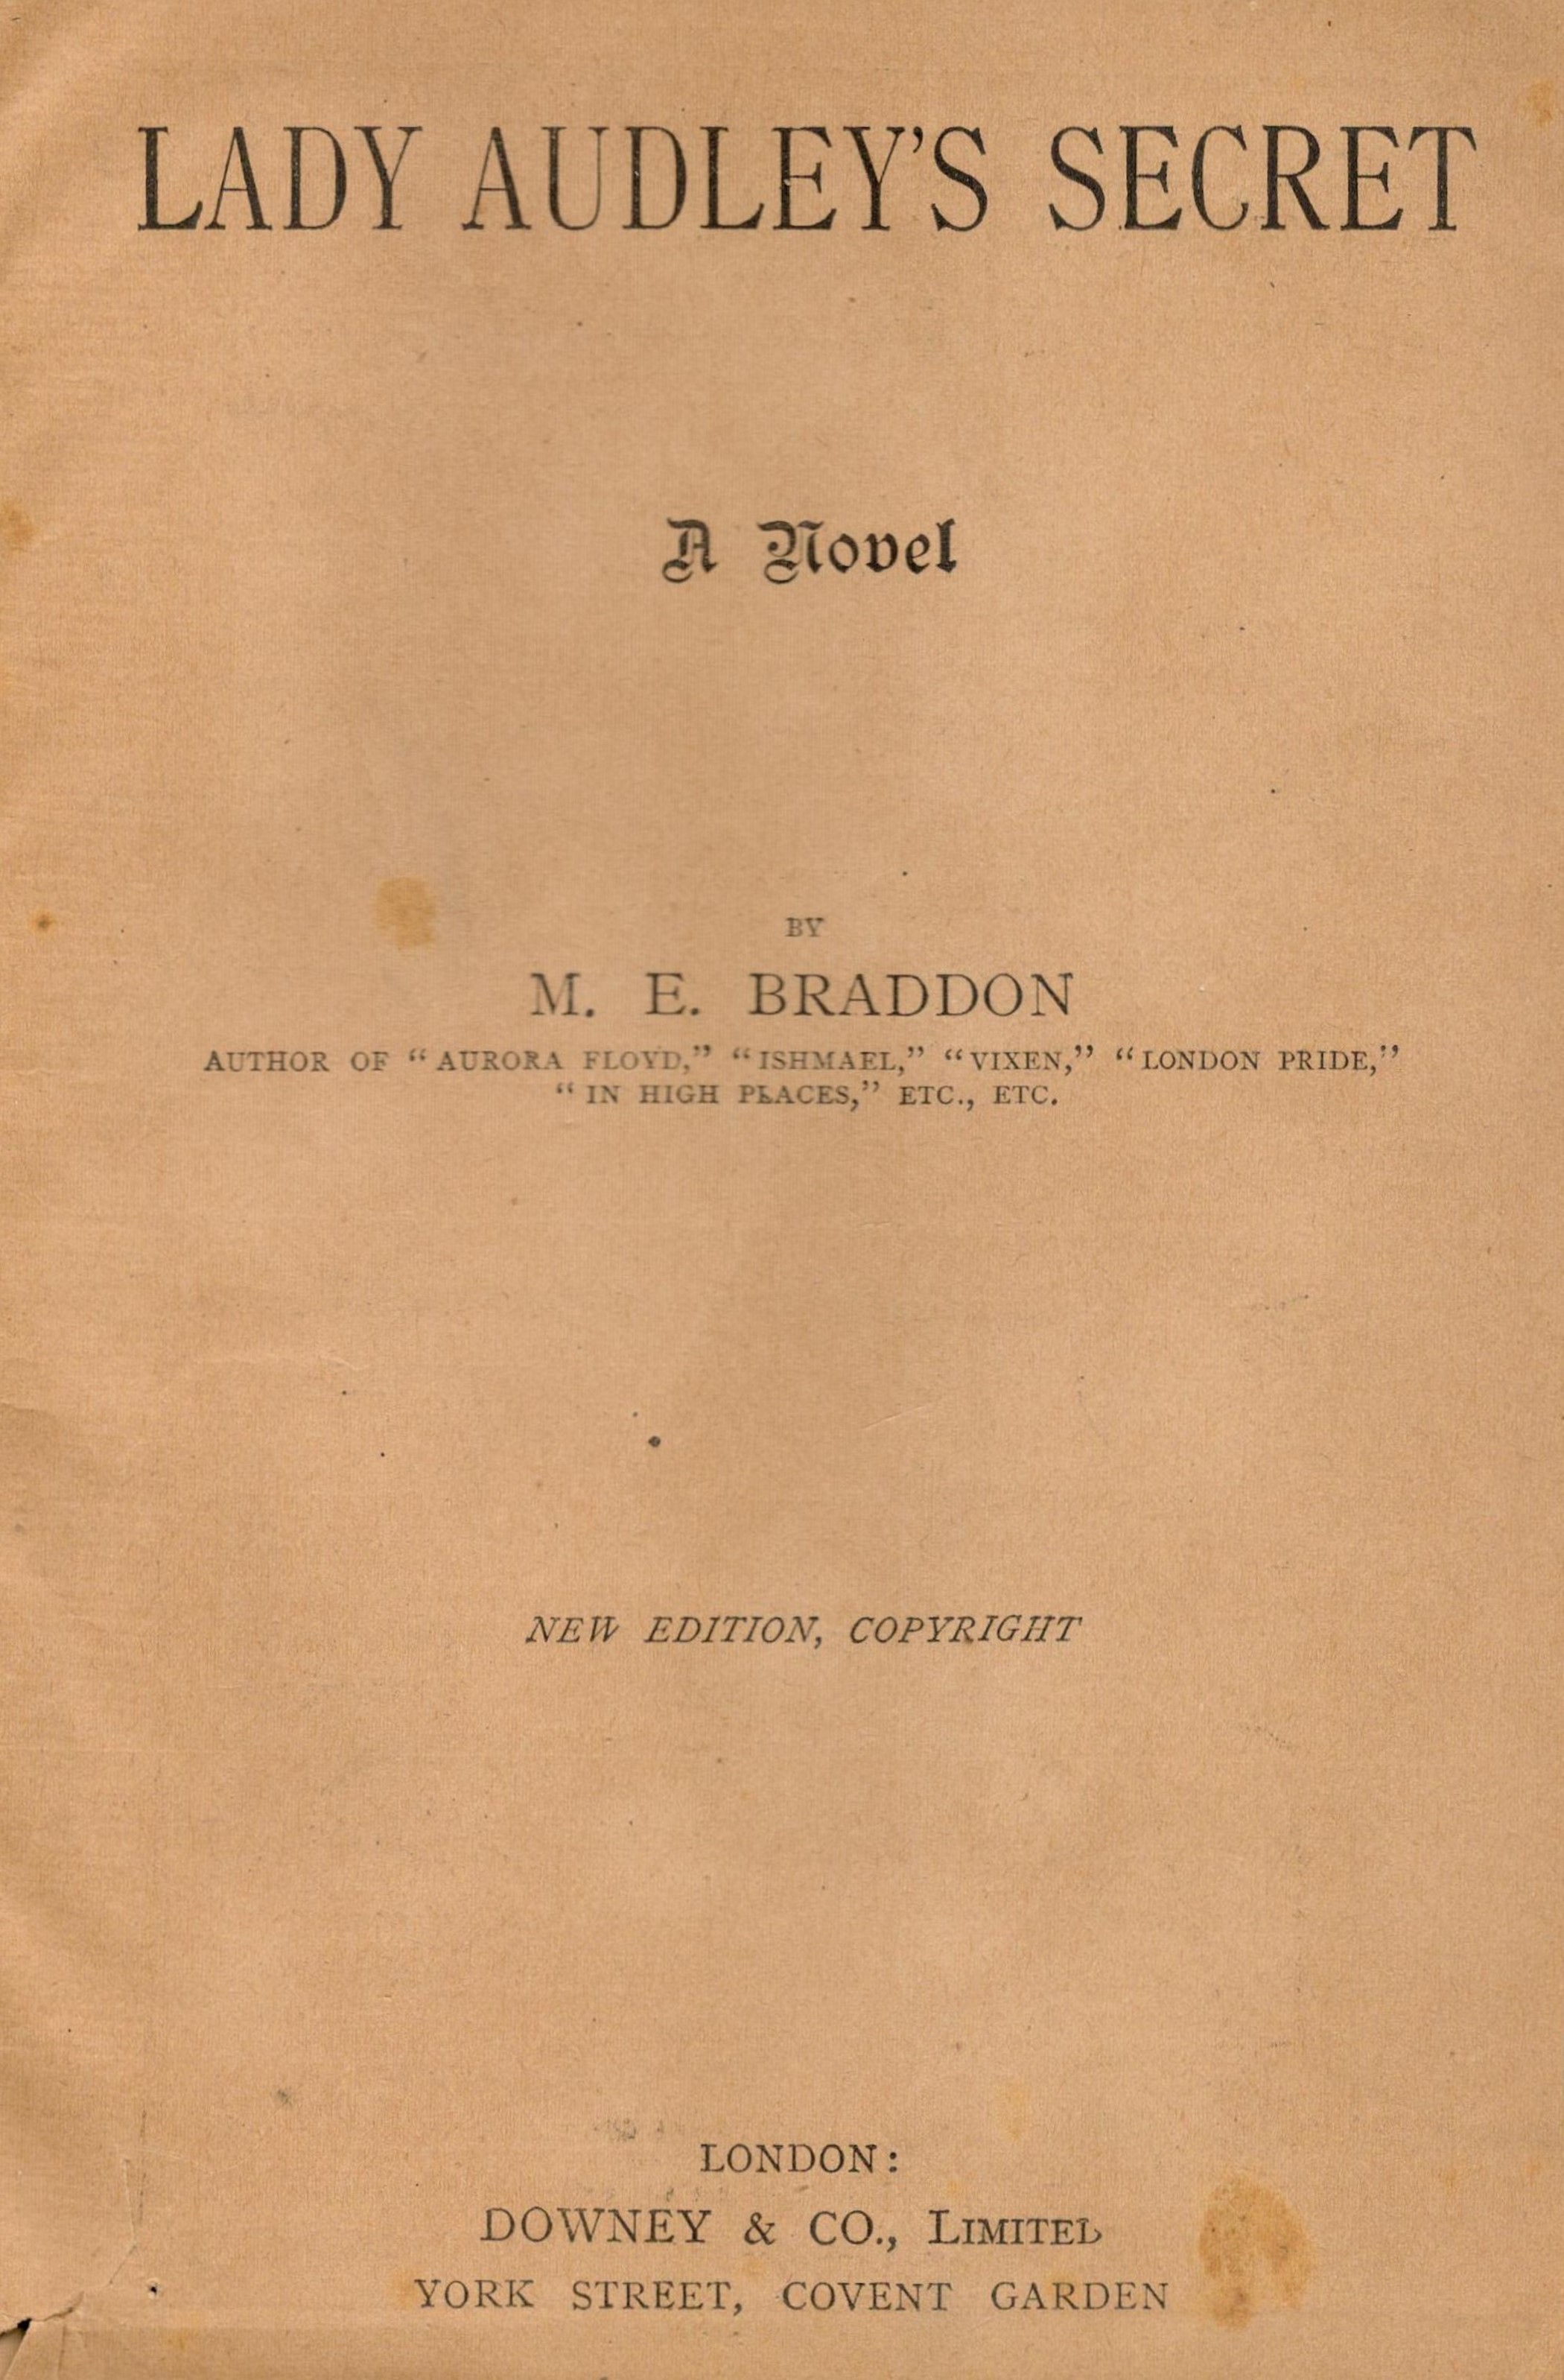 Lady Audley's Secret A Novel by M E Braddon Hardback Book New Edition date unknown published by